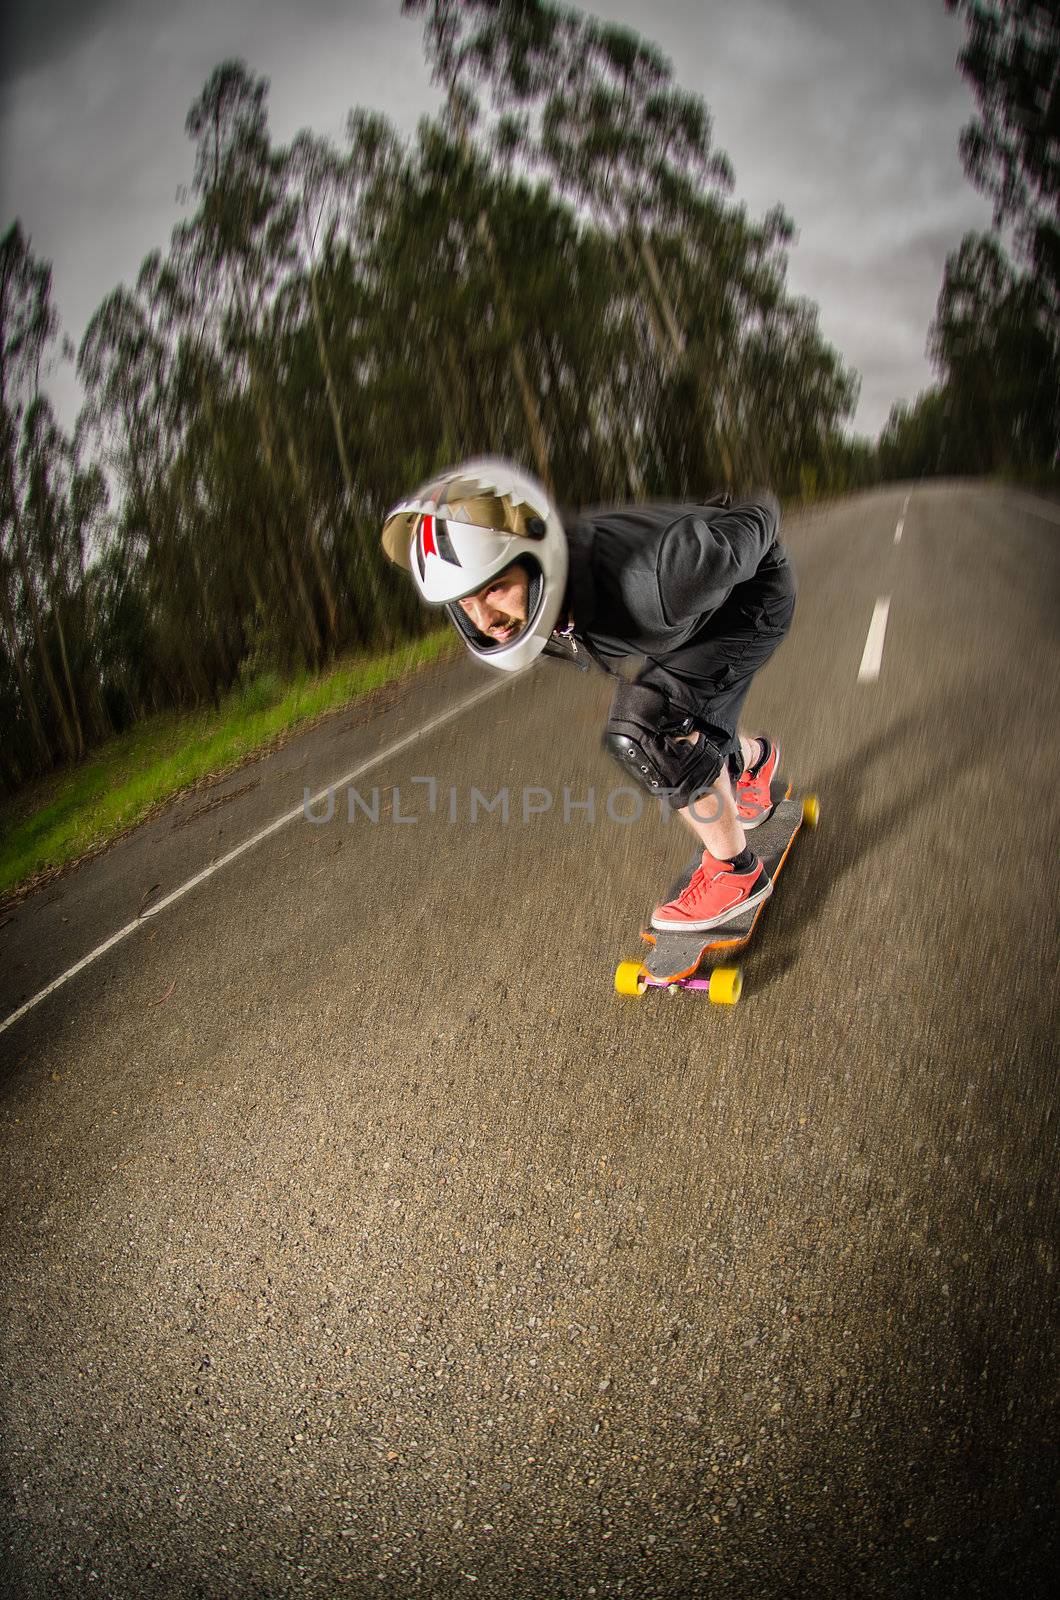 Downhill skateboarder in action on a asphalt road.